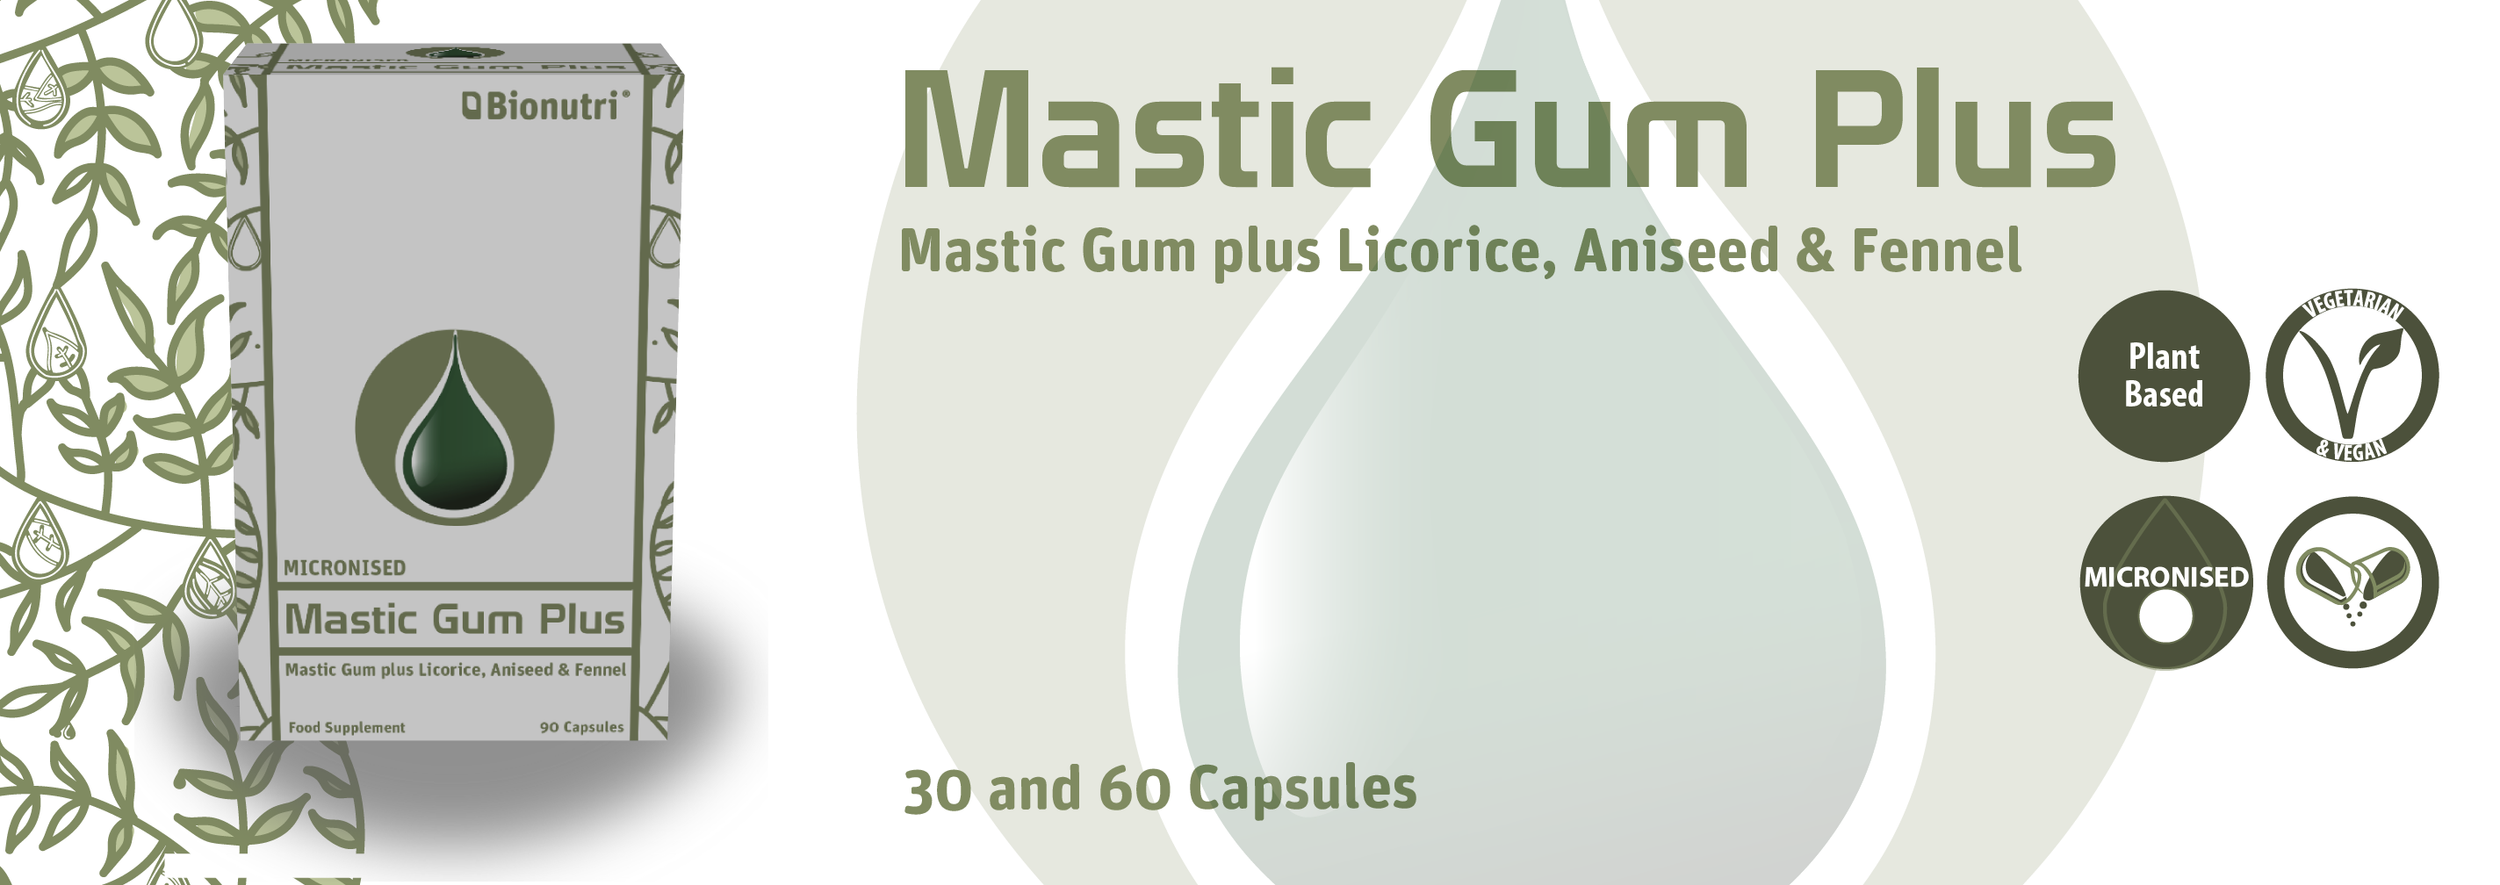 Mastic Gum 23-01.png